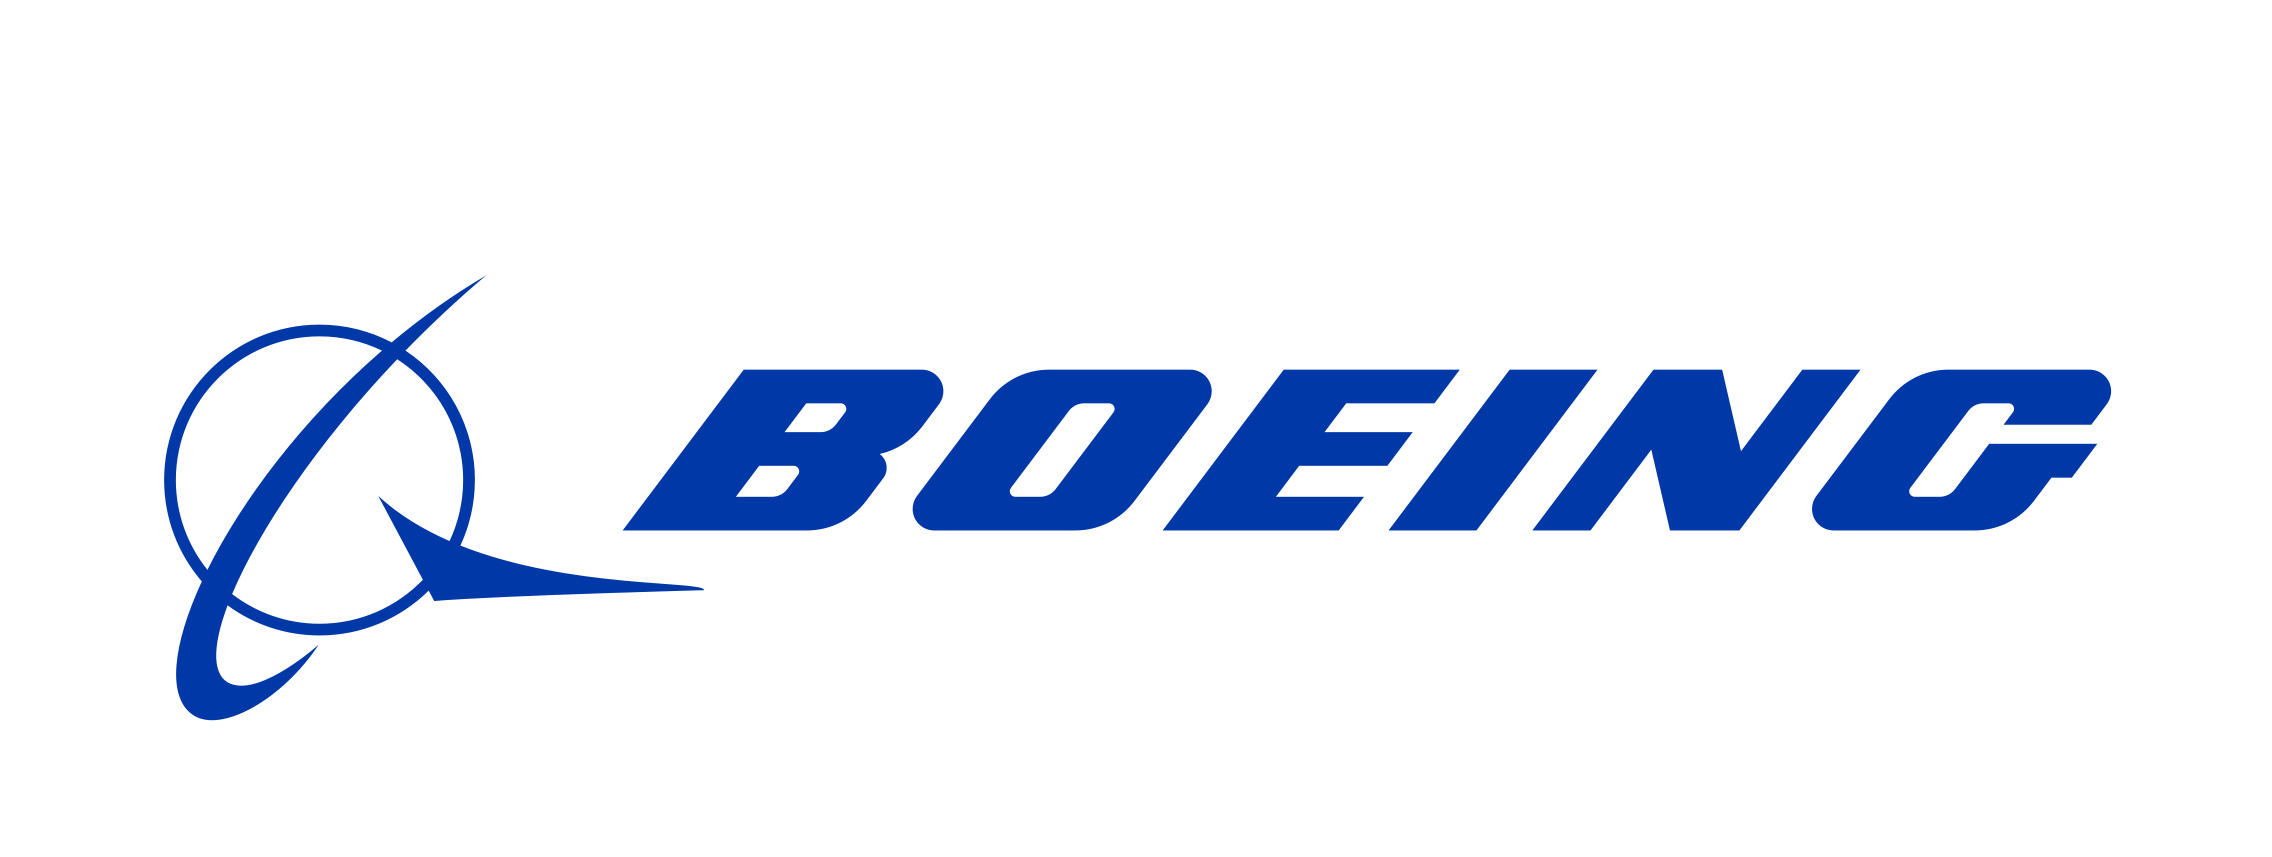 Boeing's Logo - Boeing: Boeing UK - Home